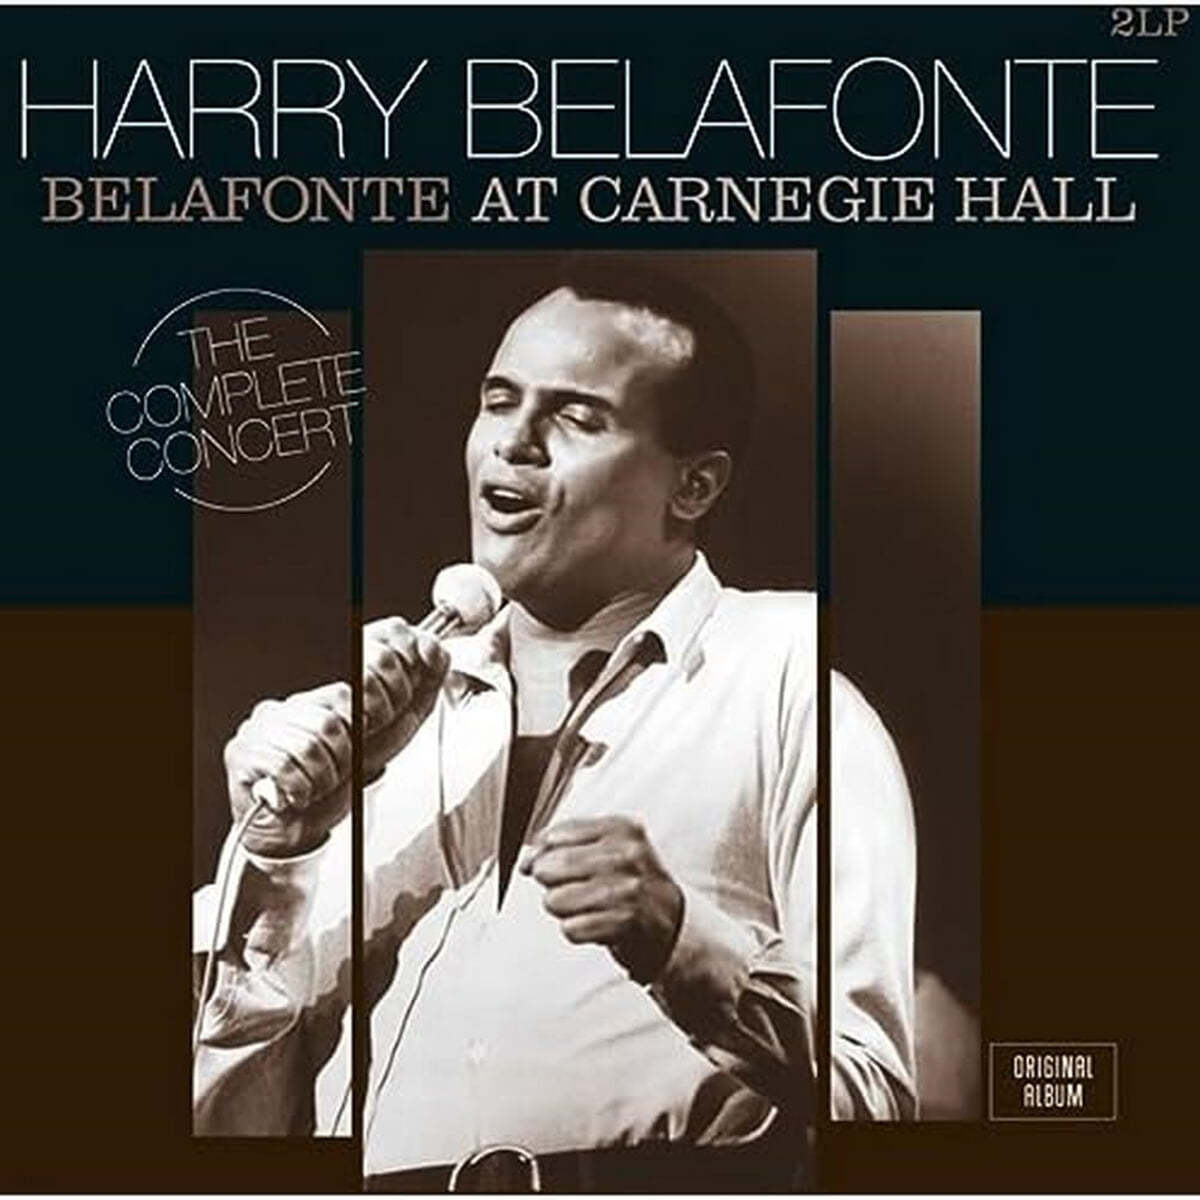 Harry Belafonte (해리 벨라폰테) - Belafonte At Carnegie Hall [라이트 브라운 컬러 2LP]